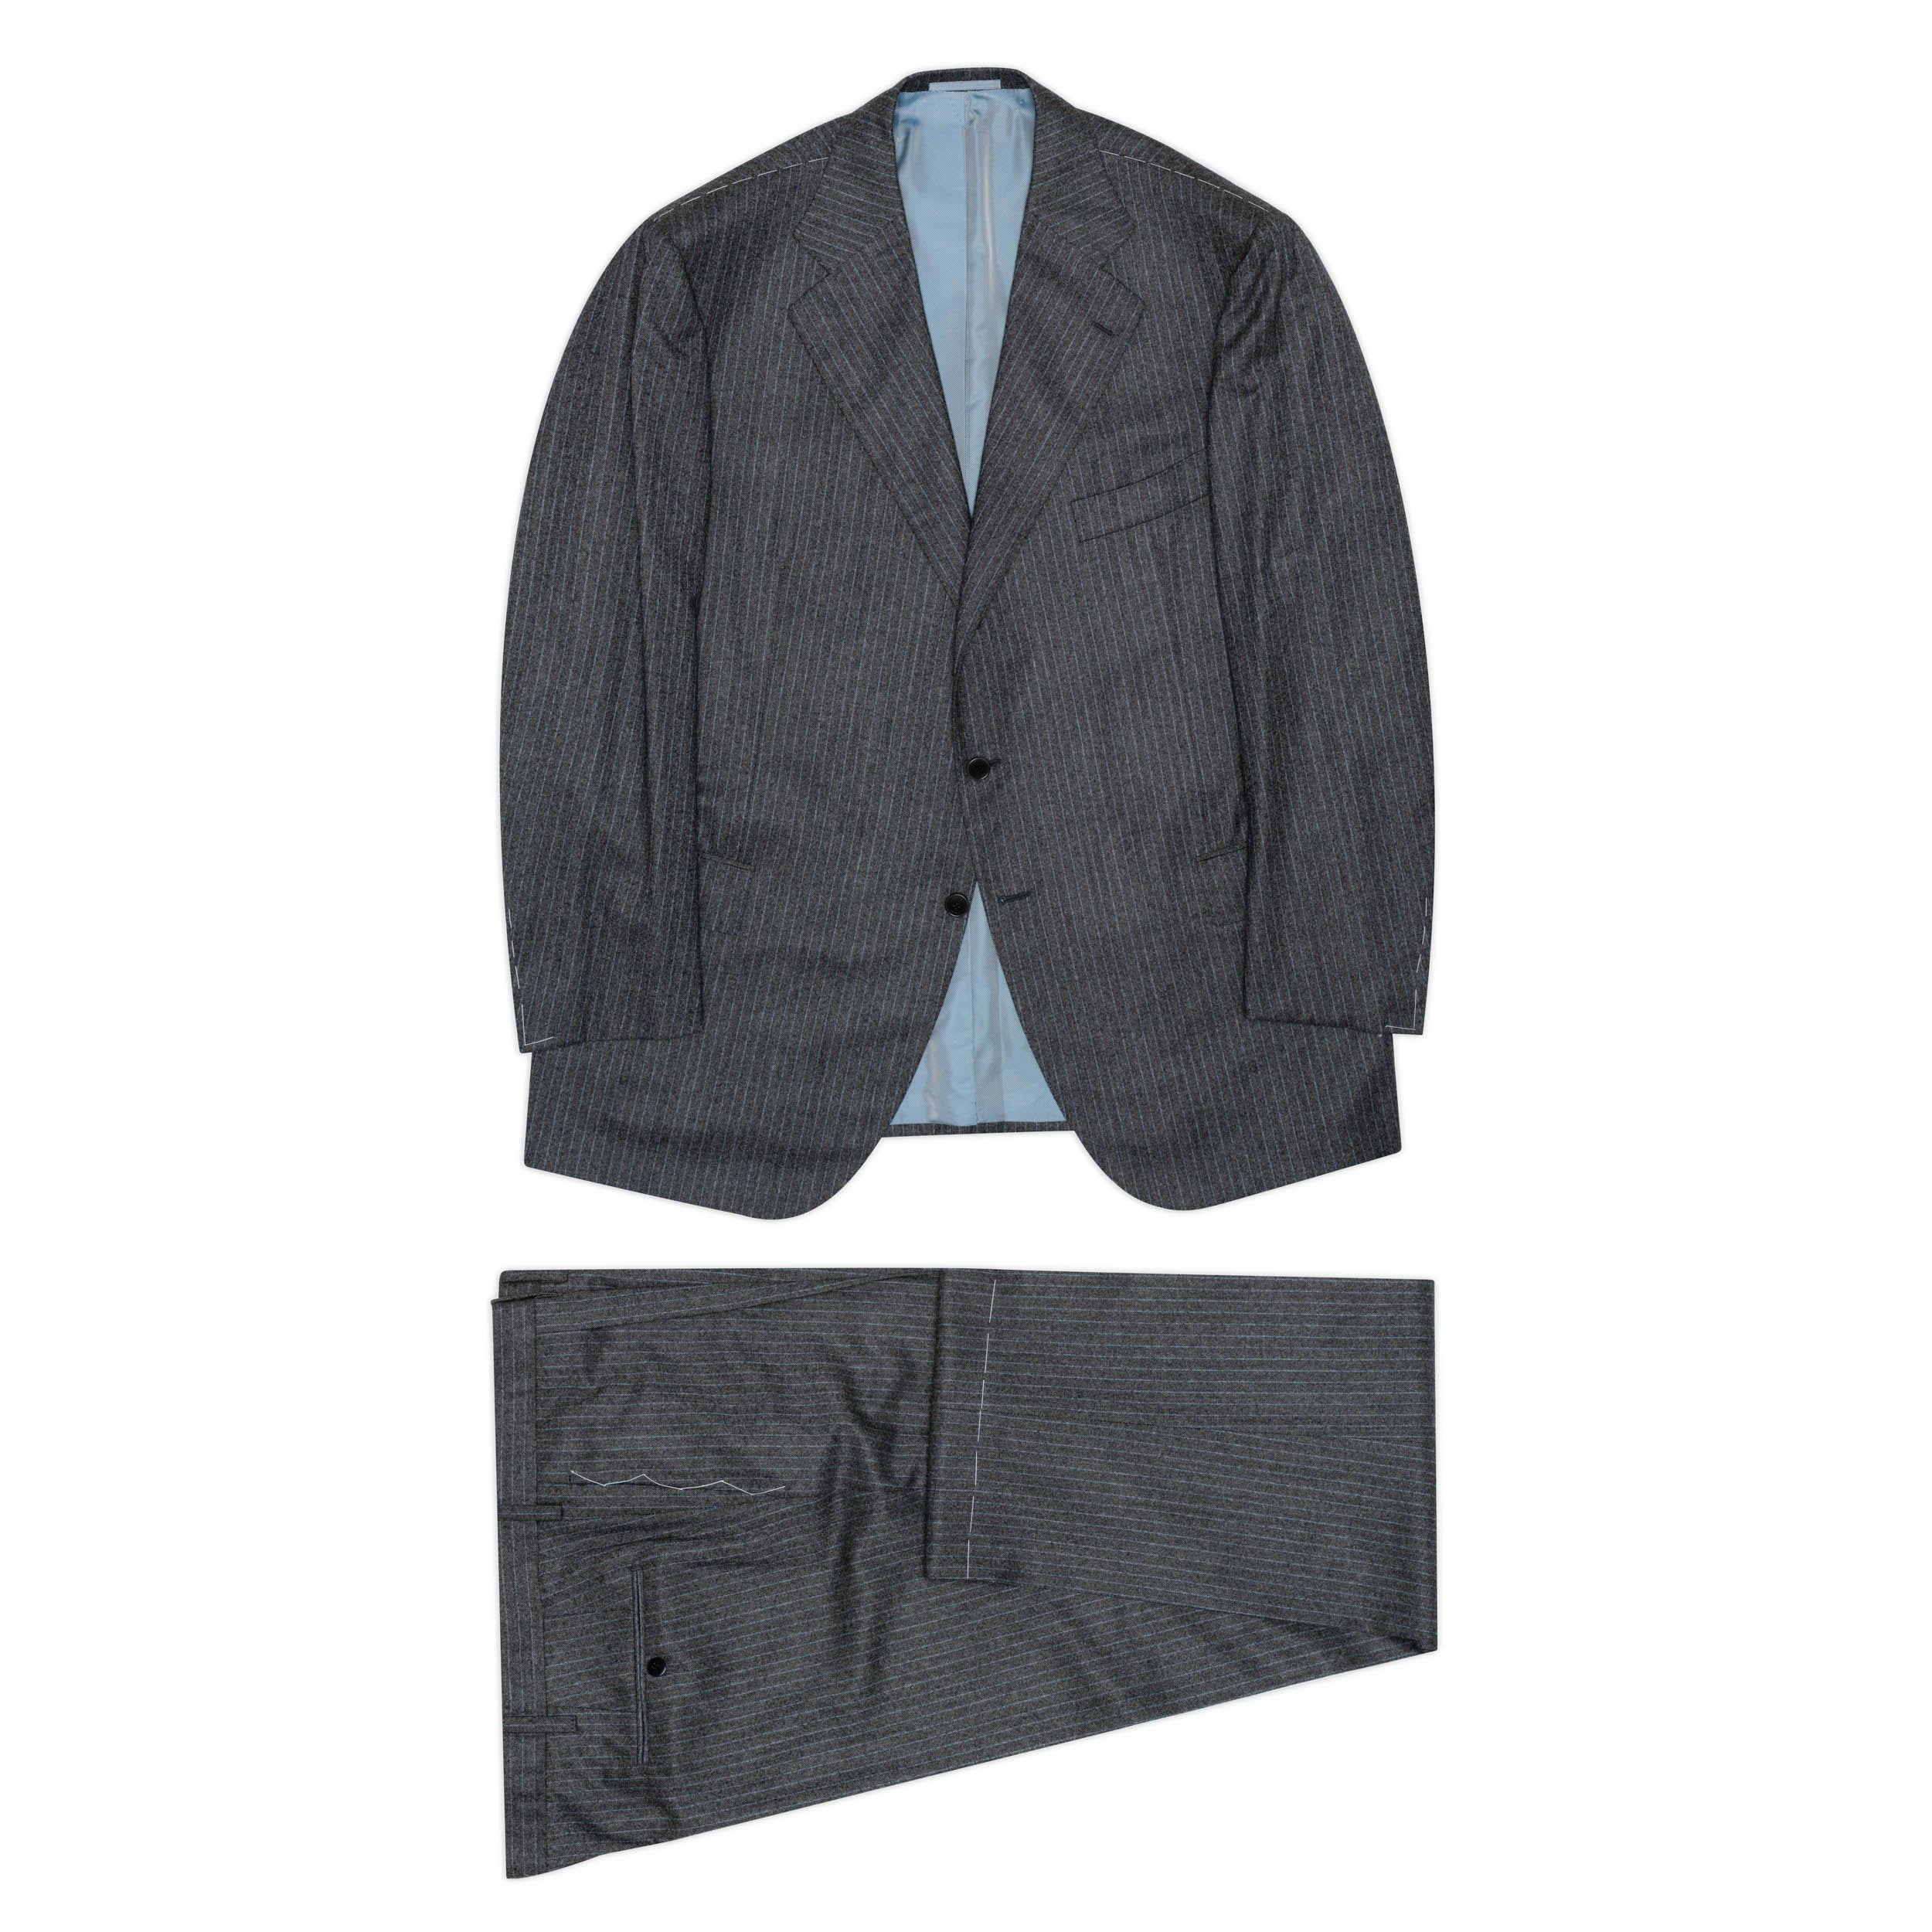 Image of CESARE ATTOLINI Super 120's Cashmere Suit